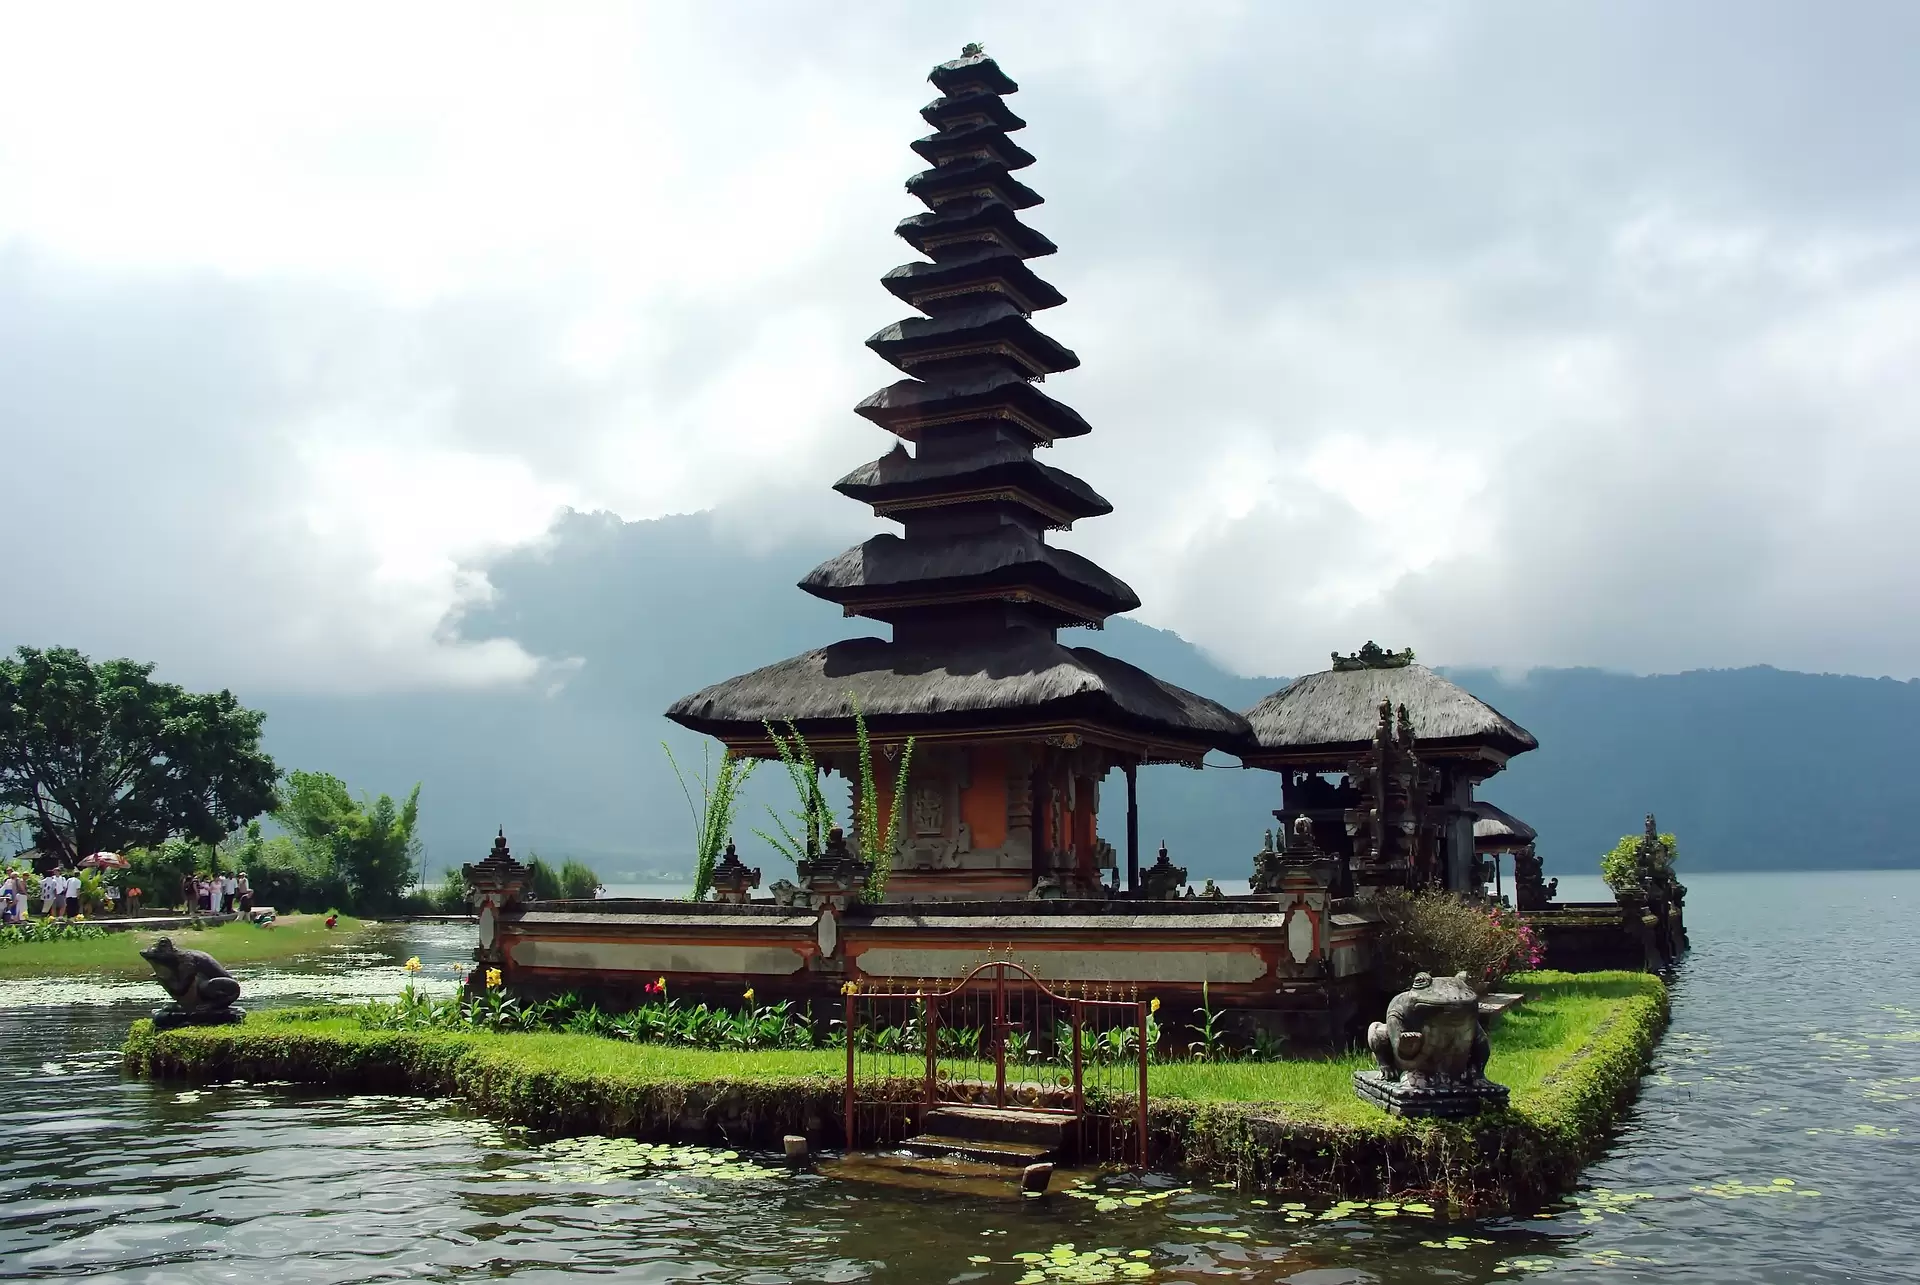 Revelion Indonezia - Insula Bali & Insula Lombok